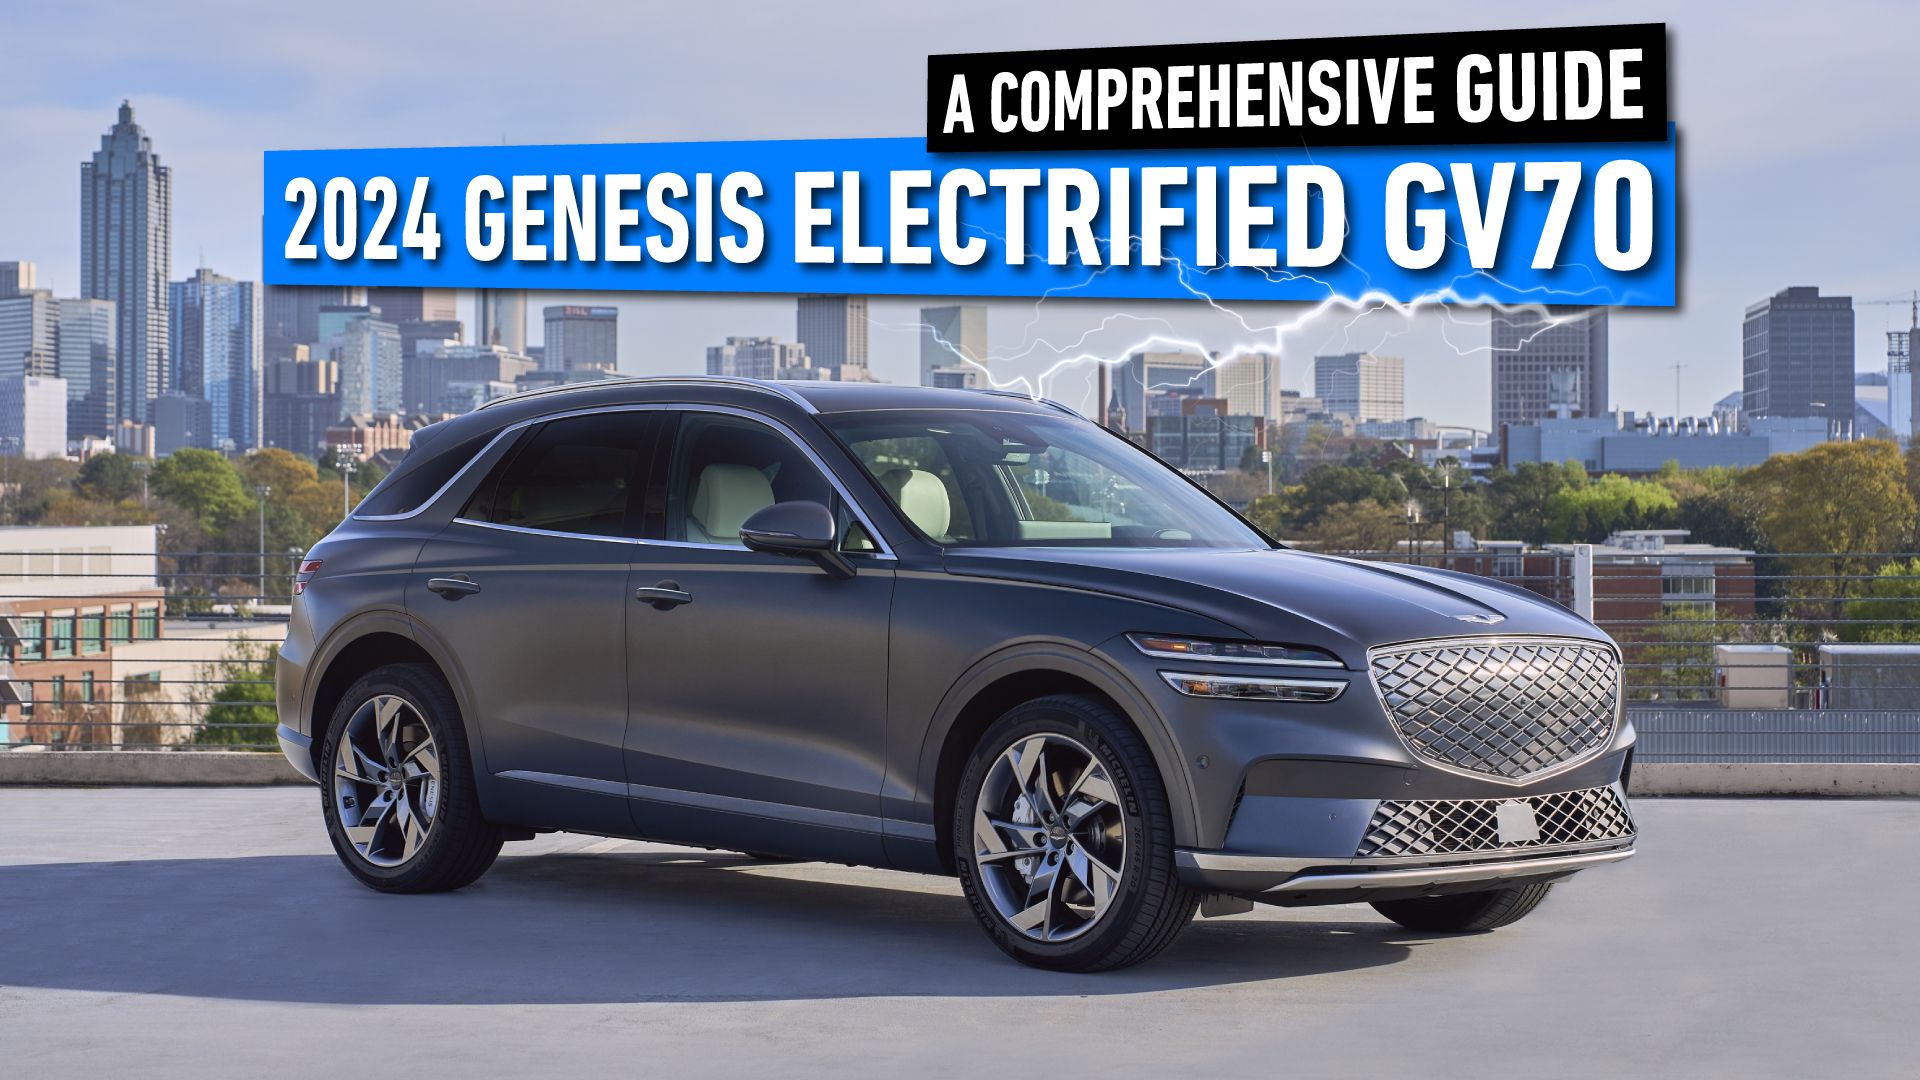 2024 Genesis Electrified GV70 Comprehensive Guide